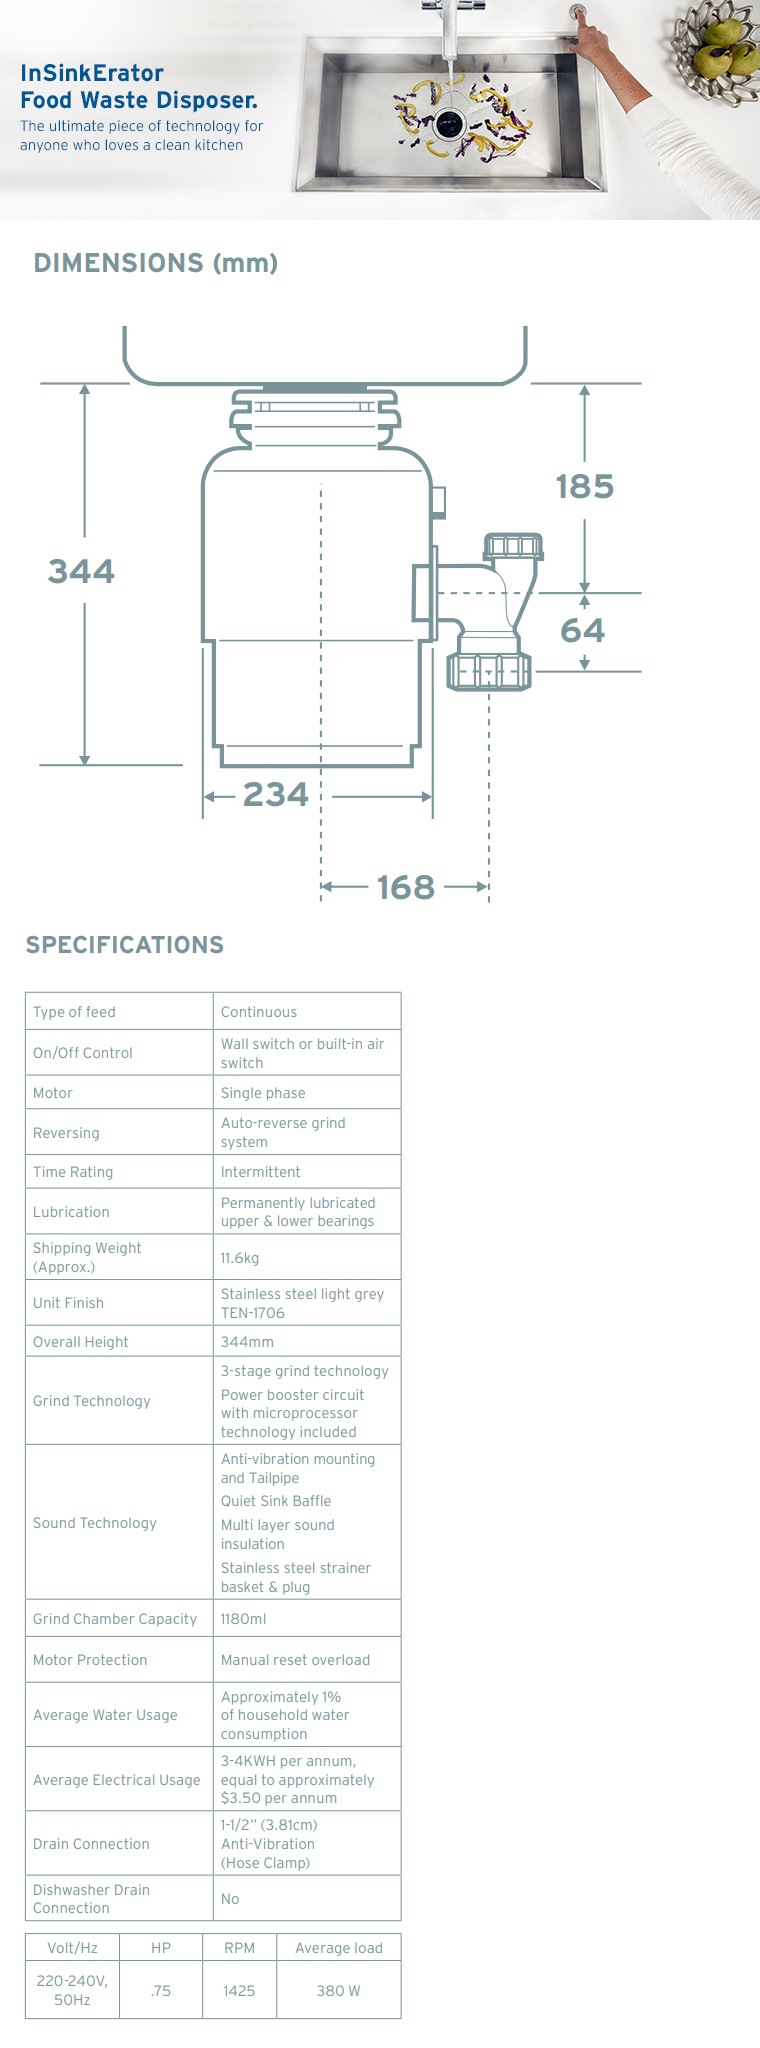 InSinkErator Evolution 250 Waste Disposal Unit specifications